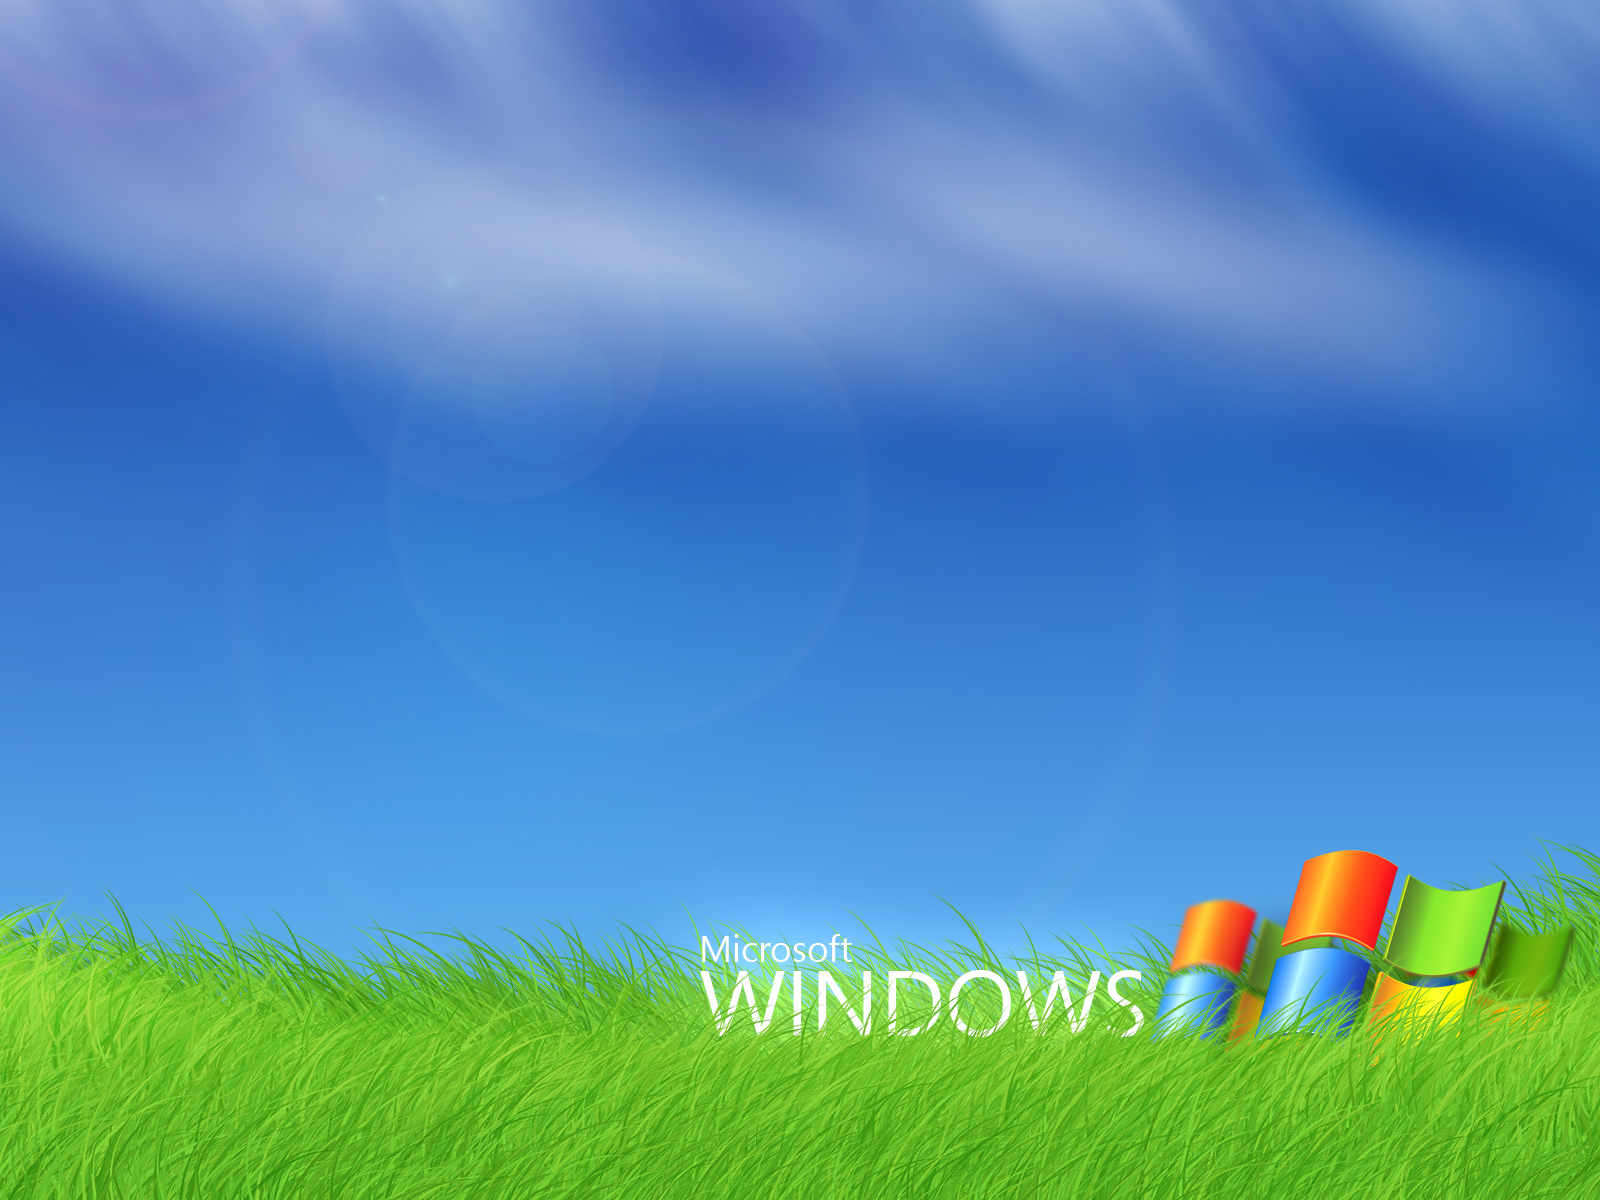 Microsoft Windows Standard Background Wallpaper Pixel